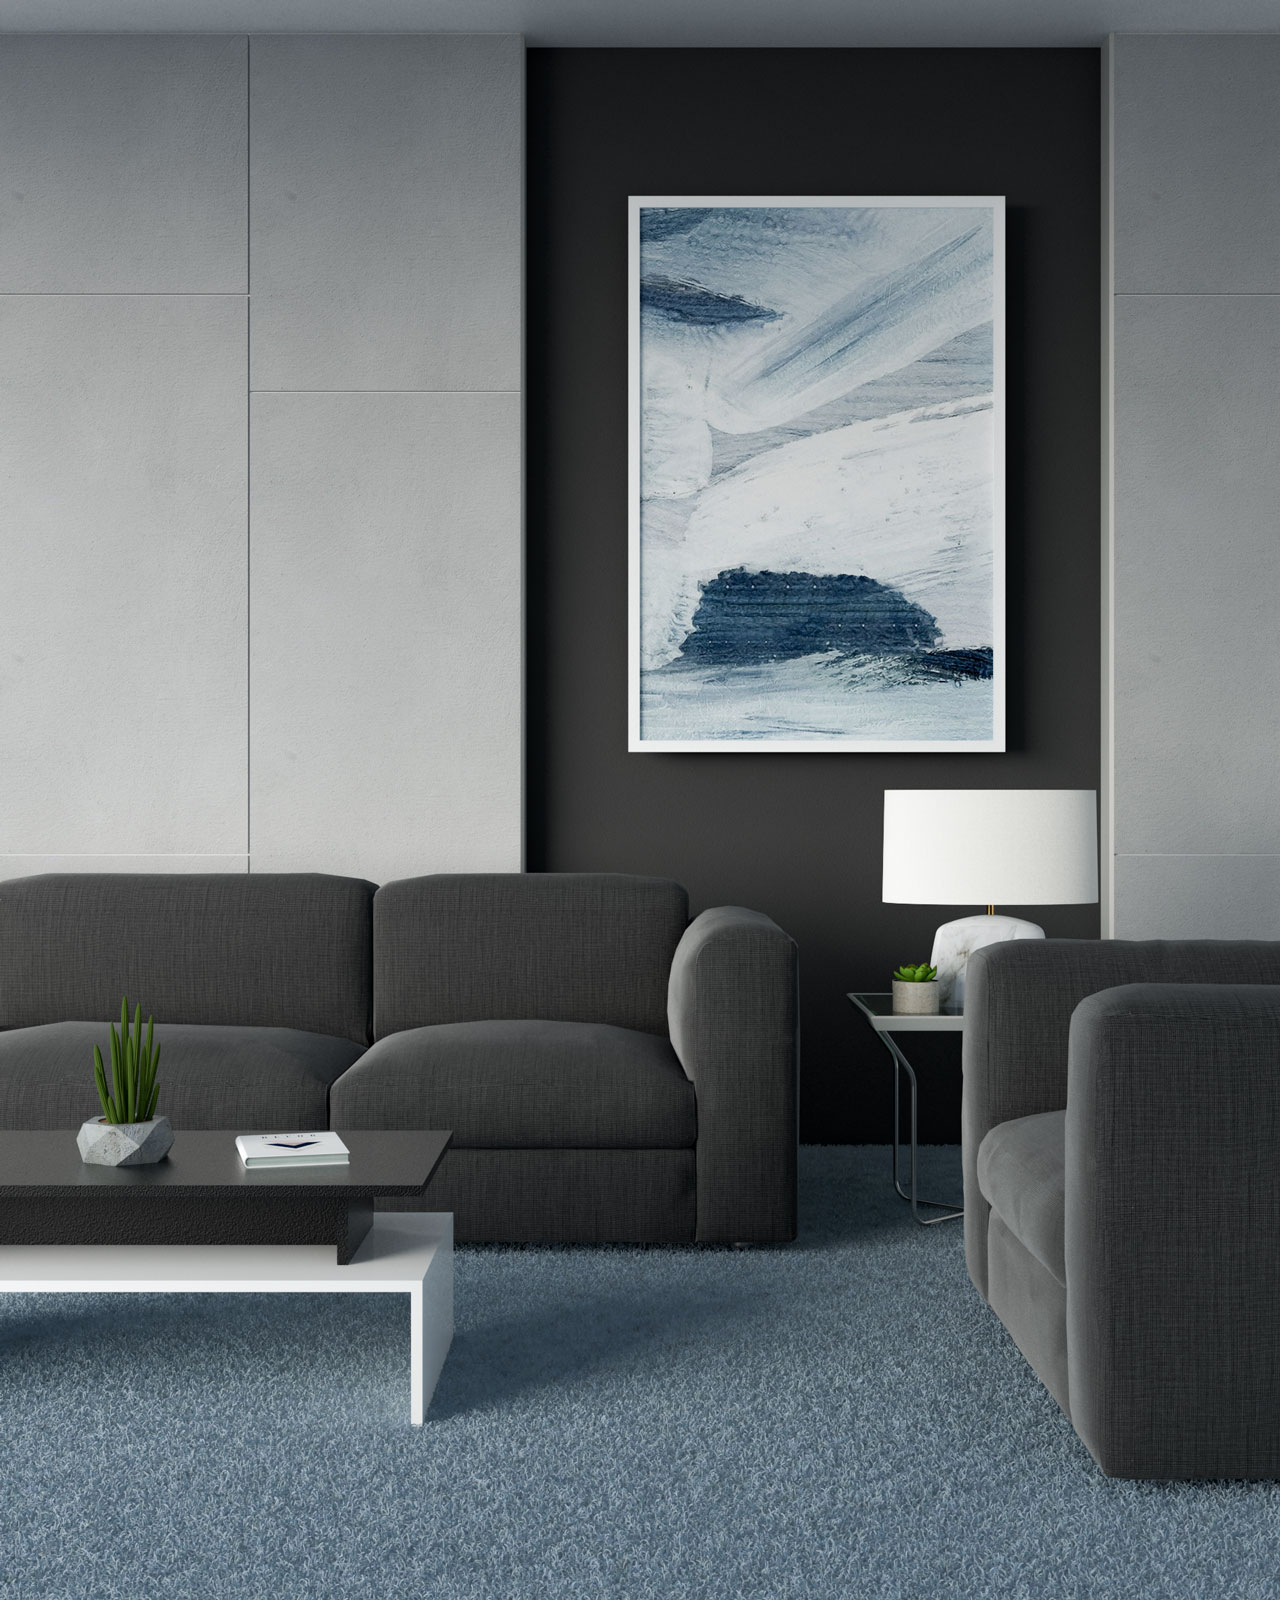 Pale blue carpet with black furniture